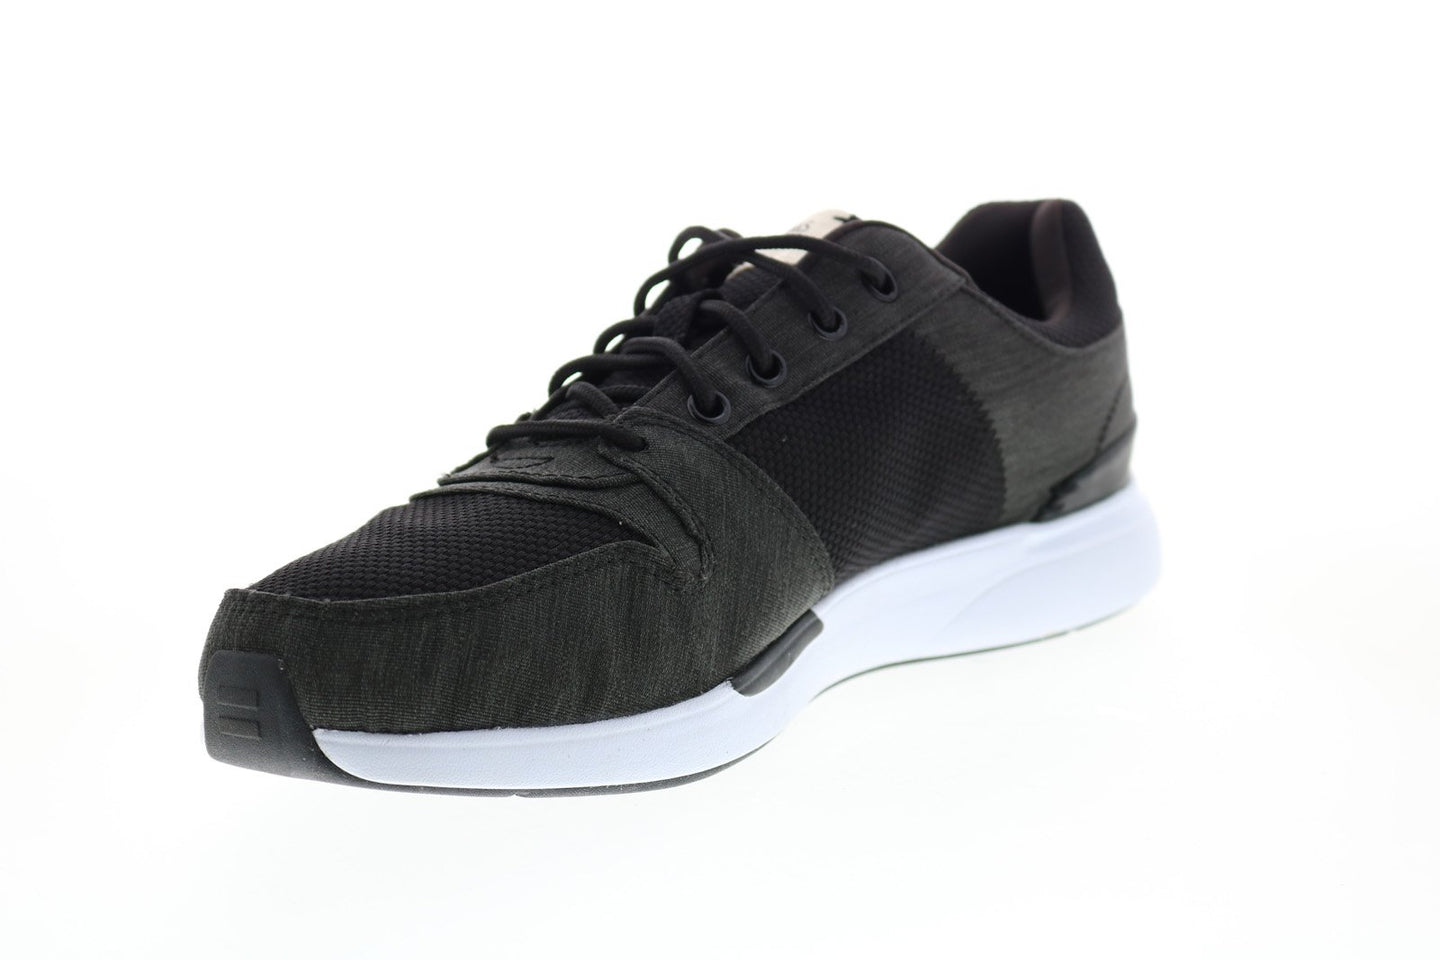 Toms Arroyo 10014201 Mens Black Canvas Lace Up Lifestyle Sneakers Shoe ...